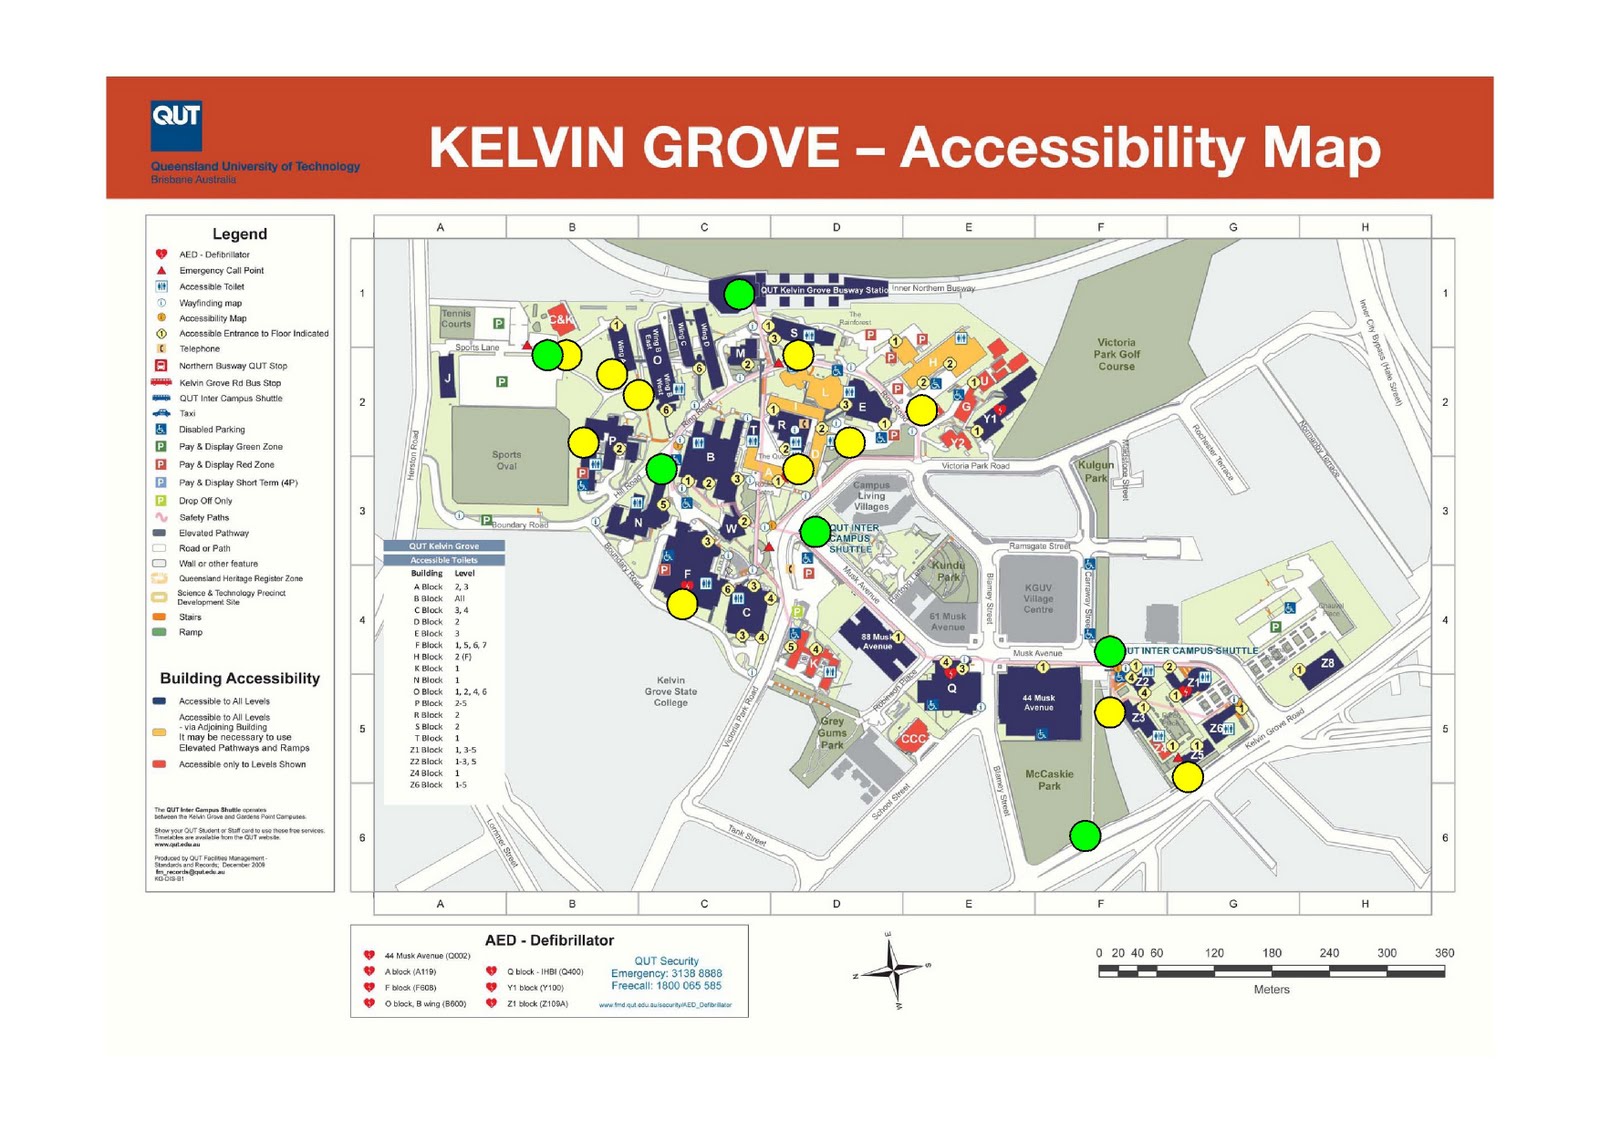 kelvin grove campus map Theroadtosustainability Bike Racks And Bus Stops At Qut Kelvin Grove kelvin grove campus map